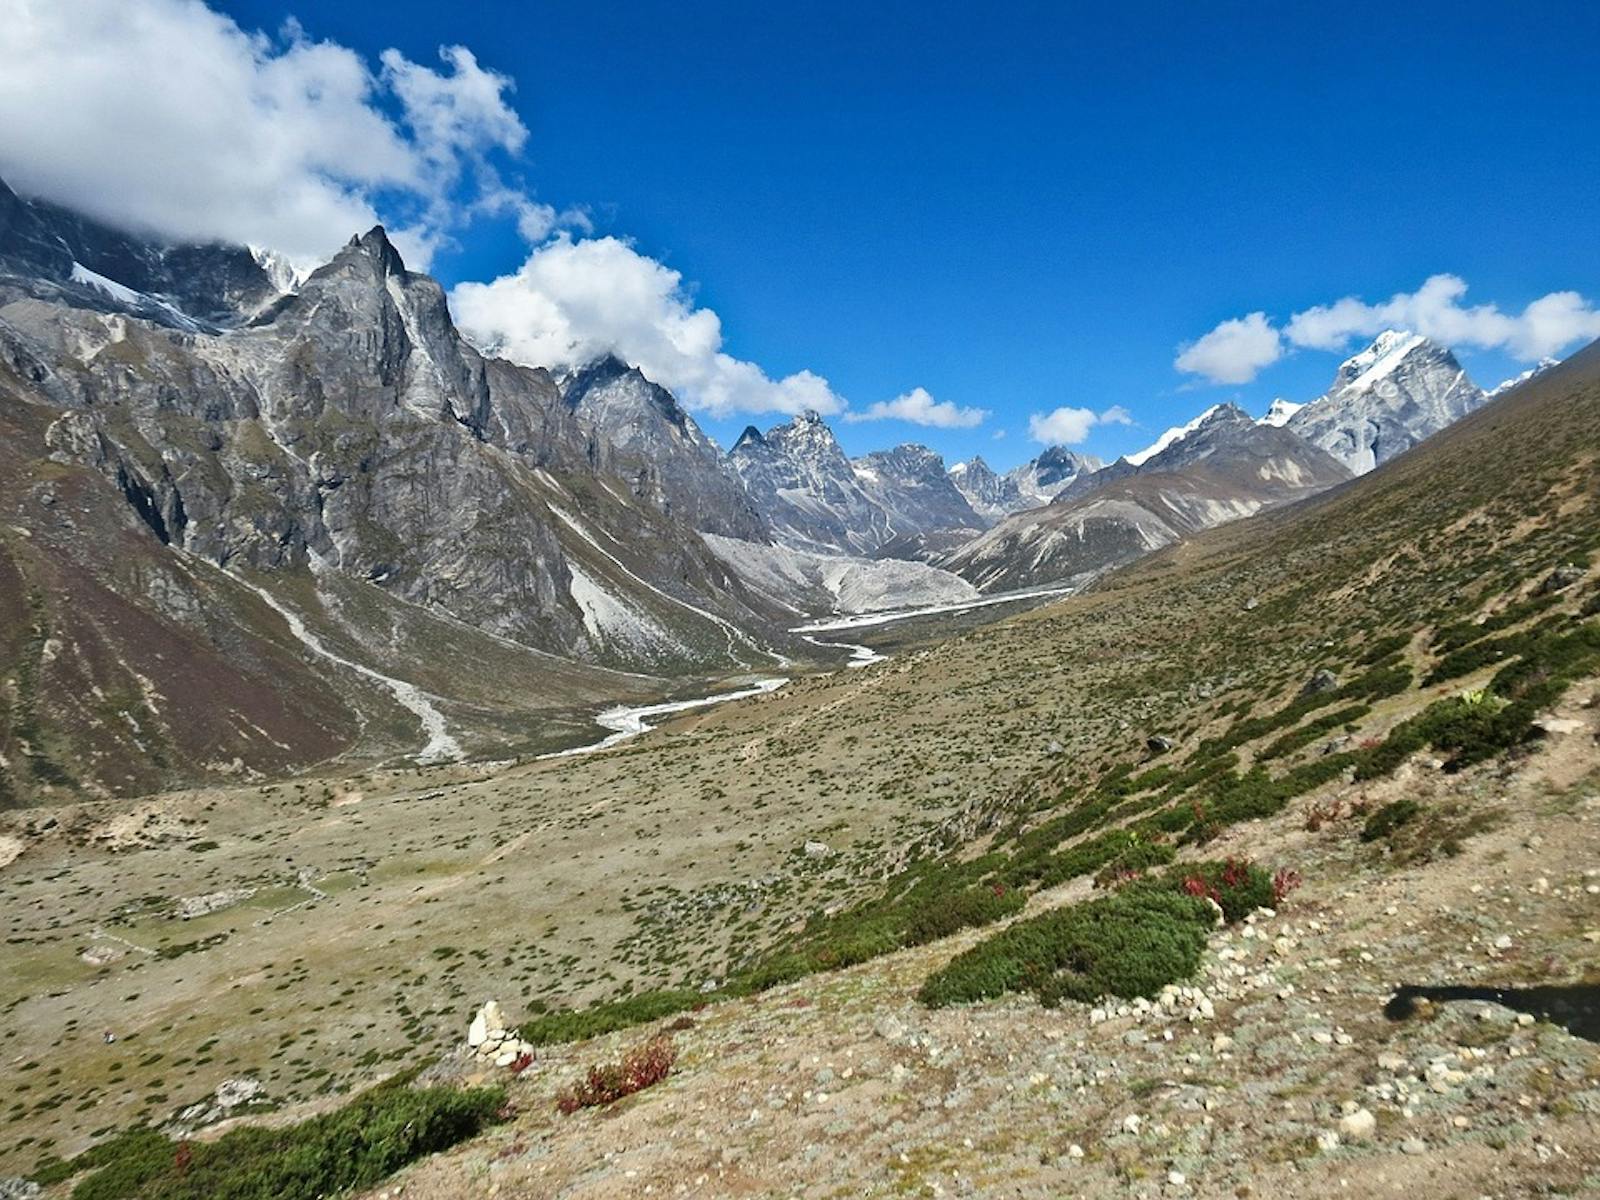 Eastern Himalayan Alpine Shrub and Meadows